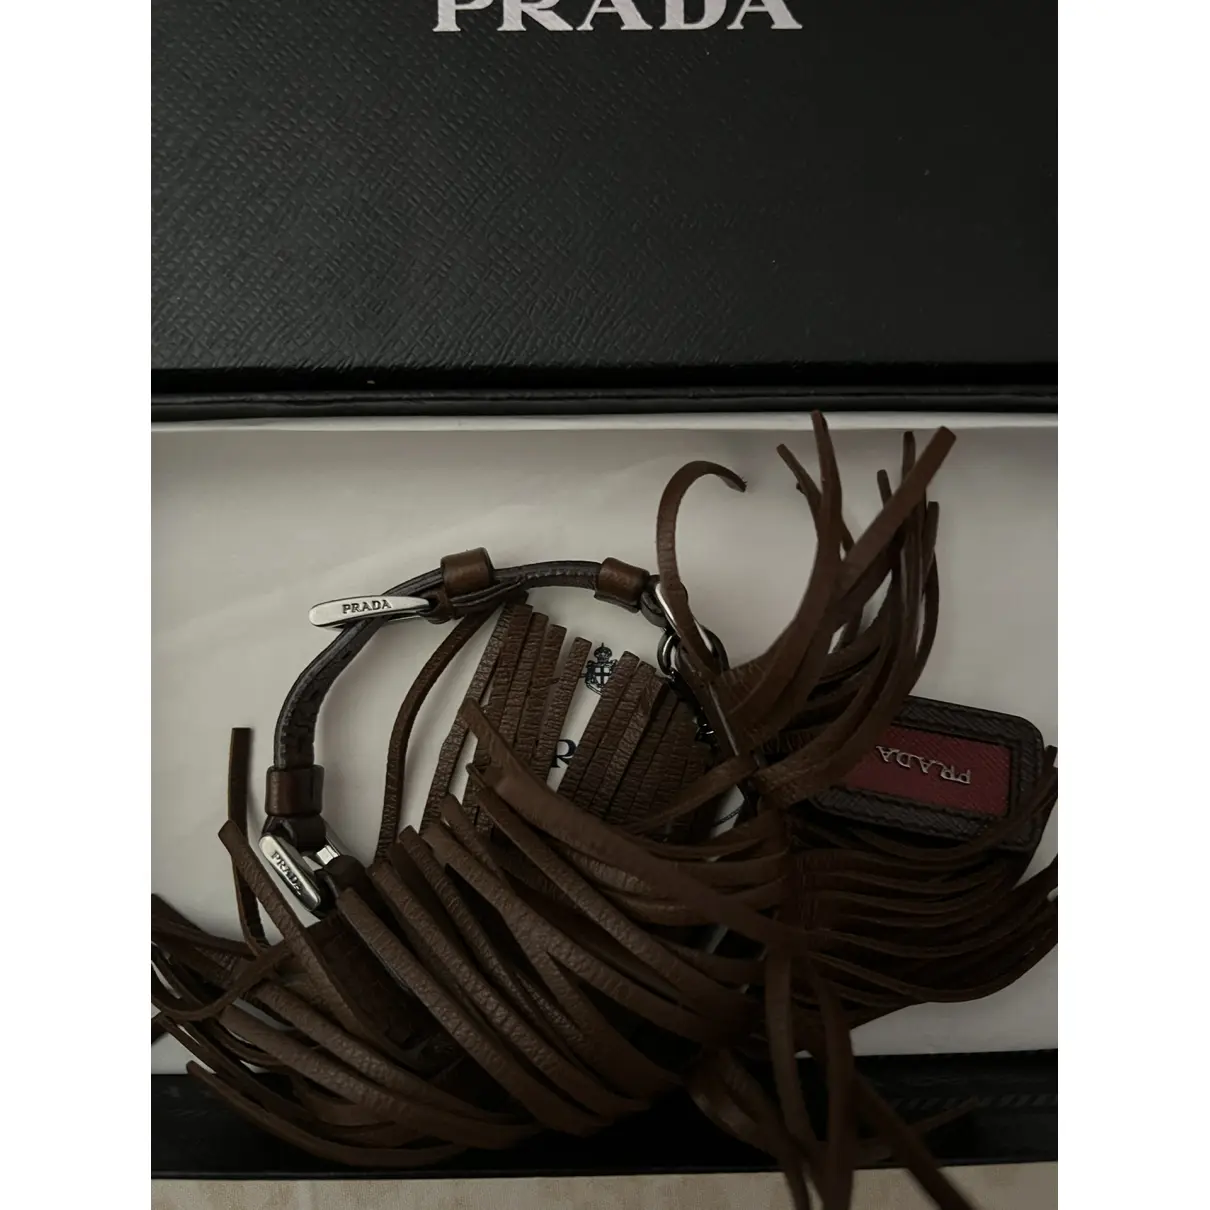 Buy Prada Leather purse online